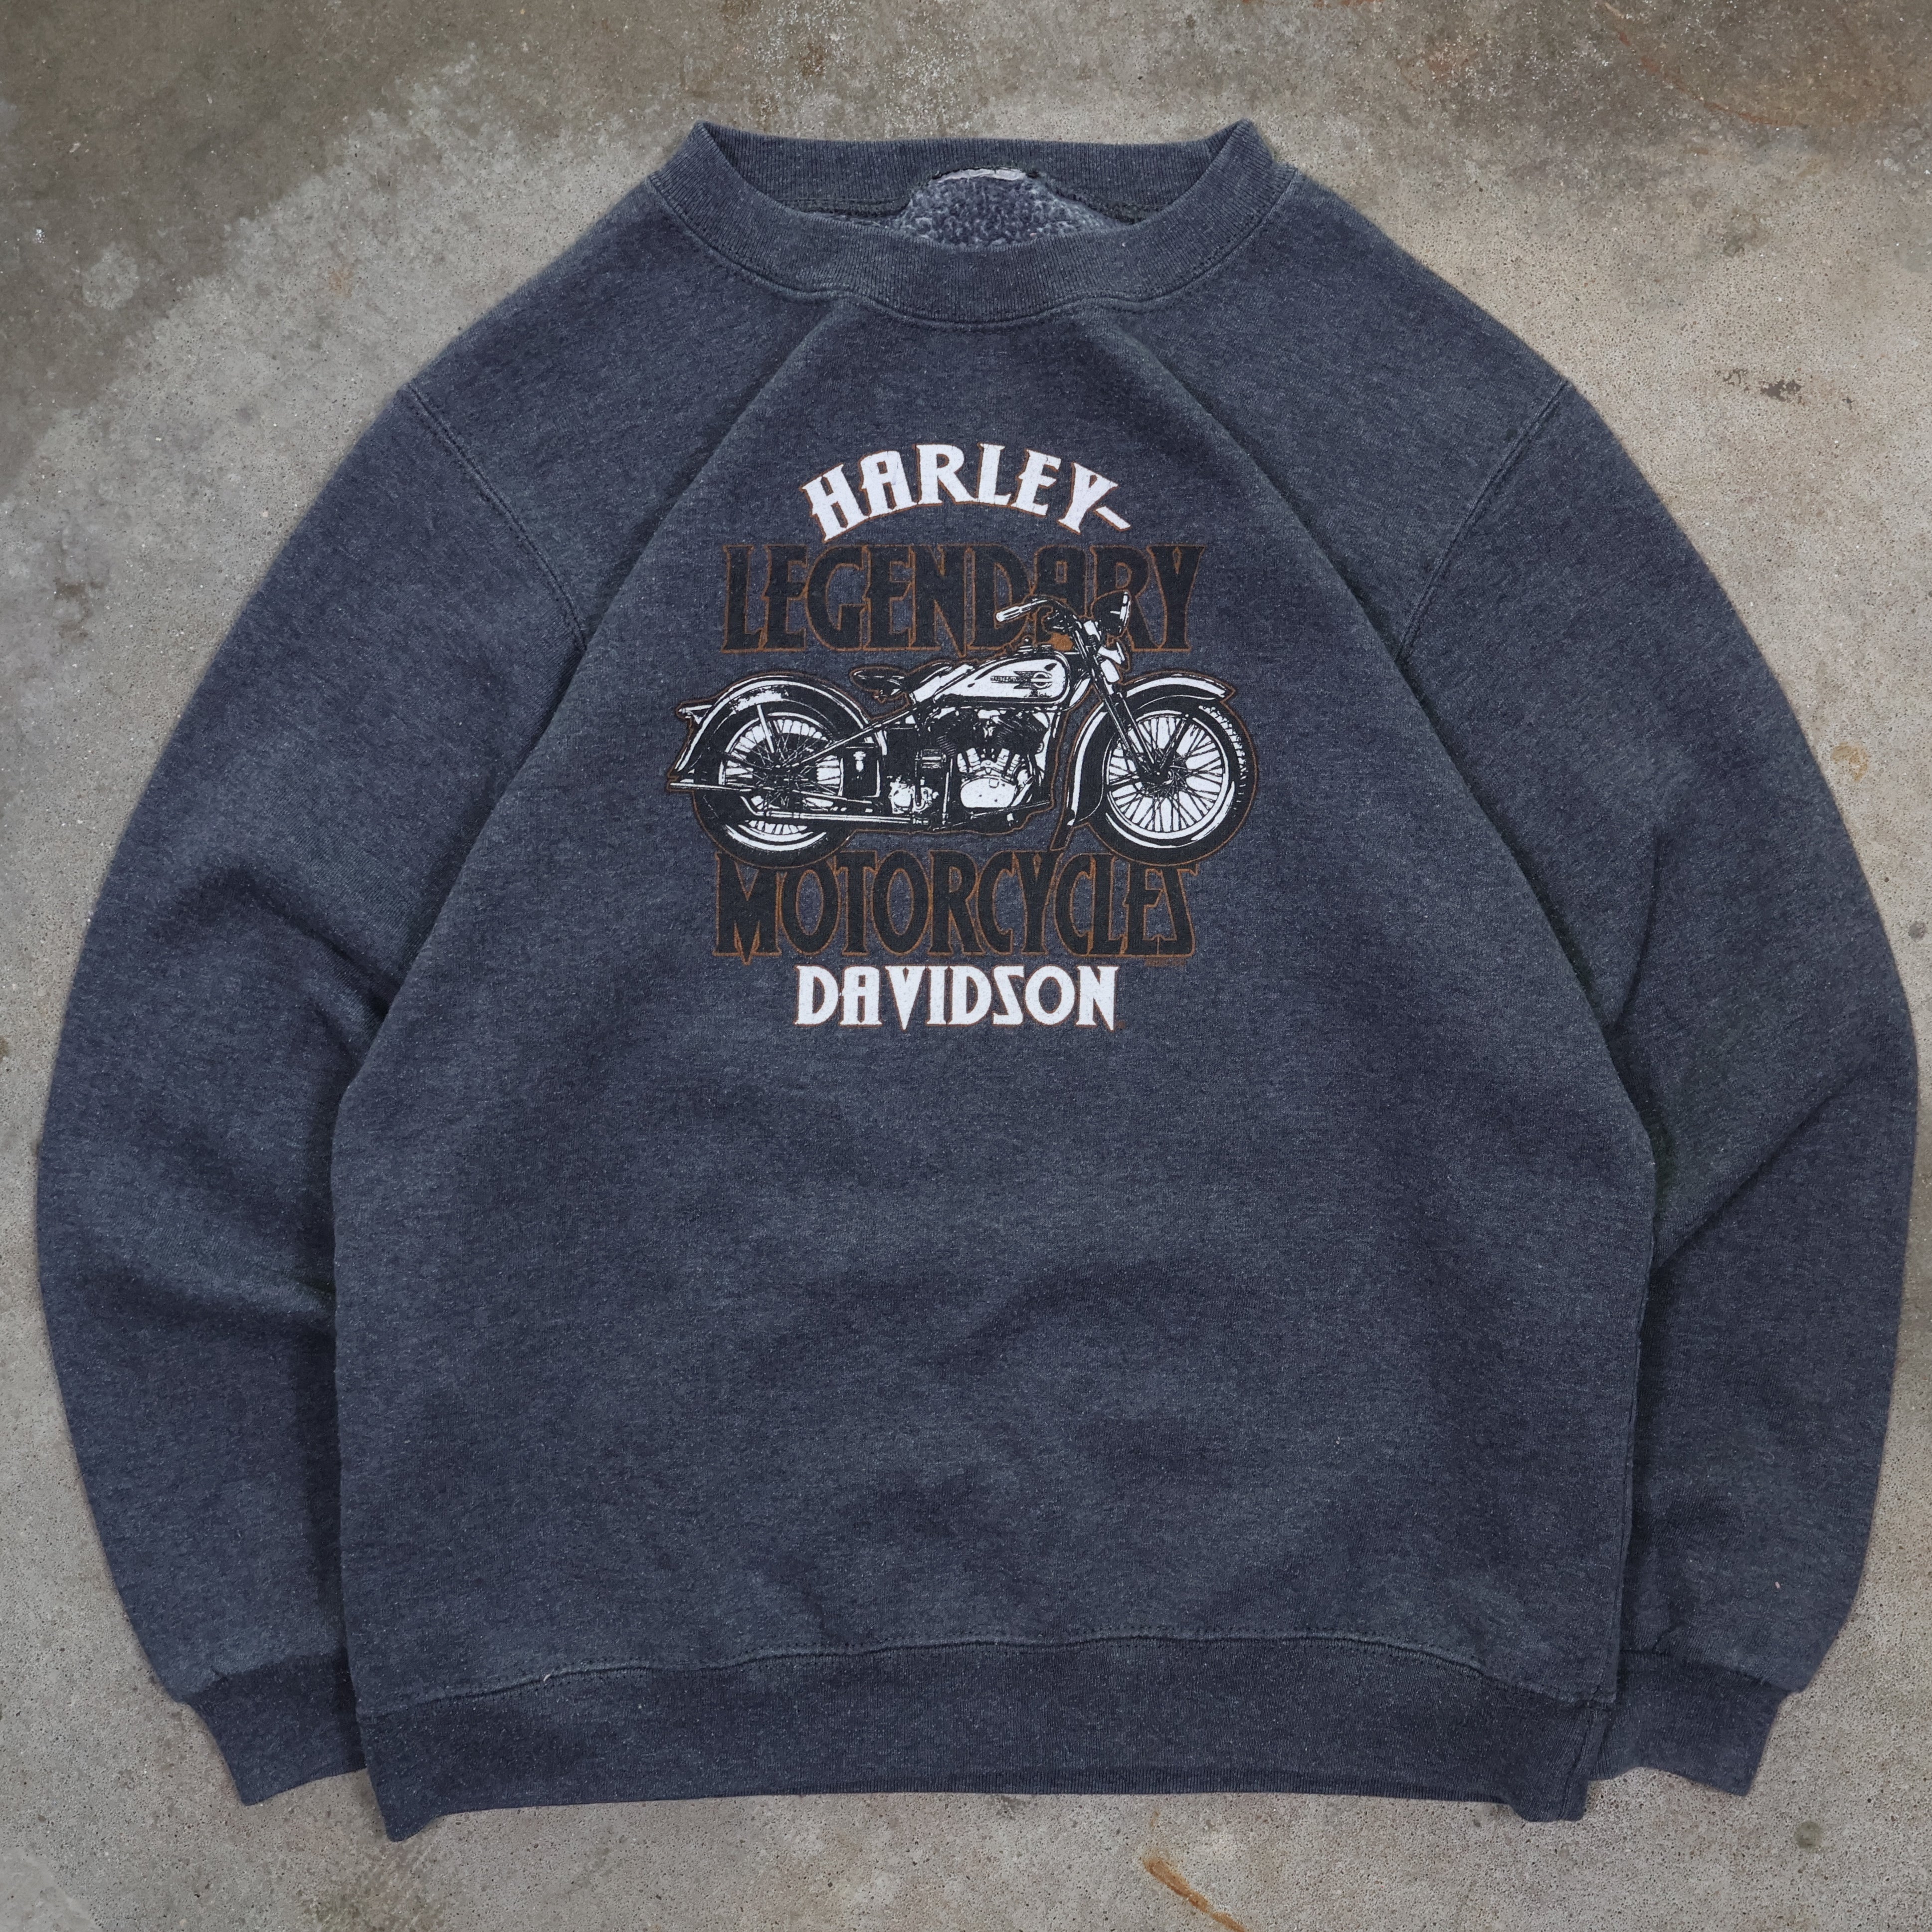 Harley Davidson Legendary Motorcycles Sweatshirt (XS)